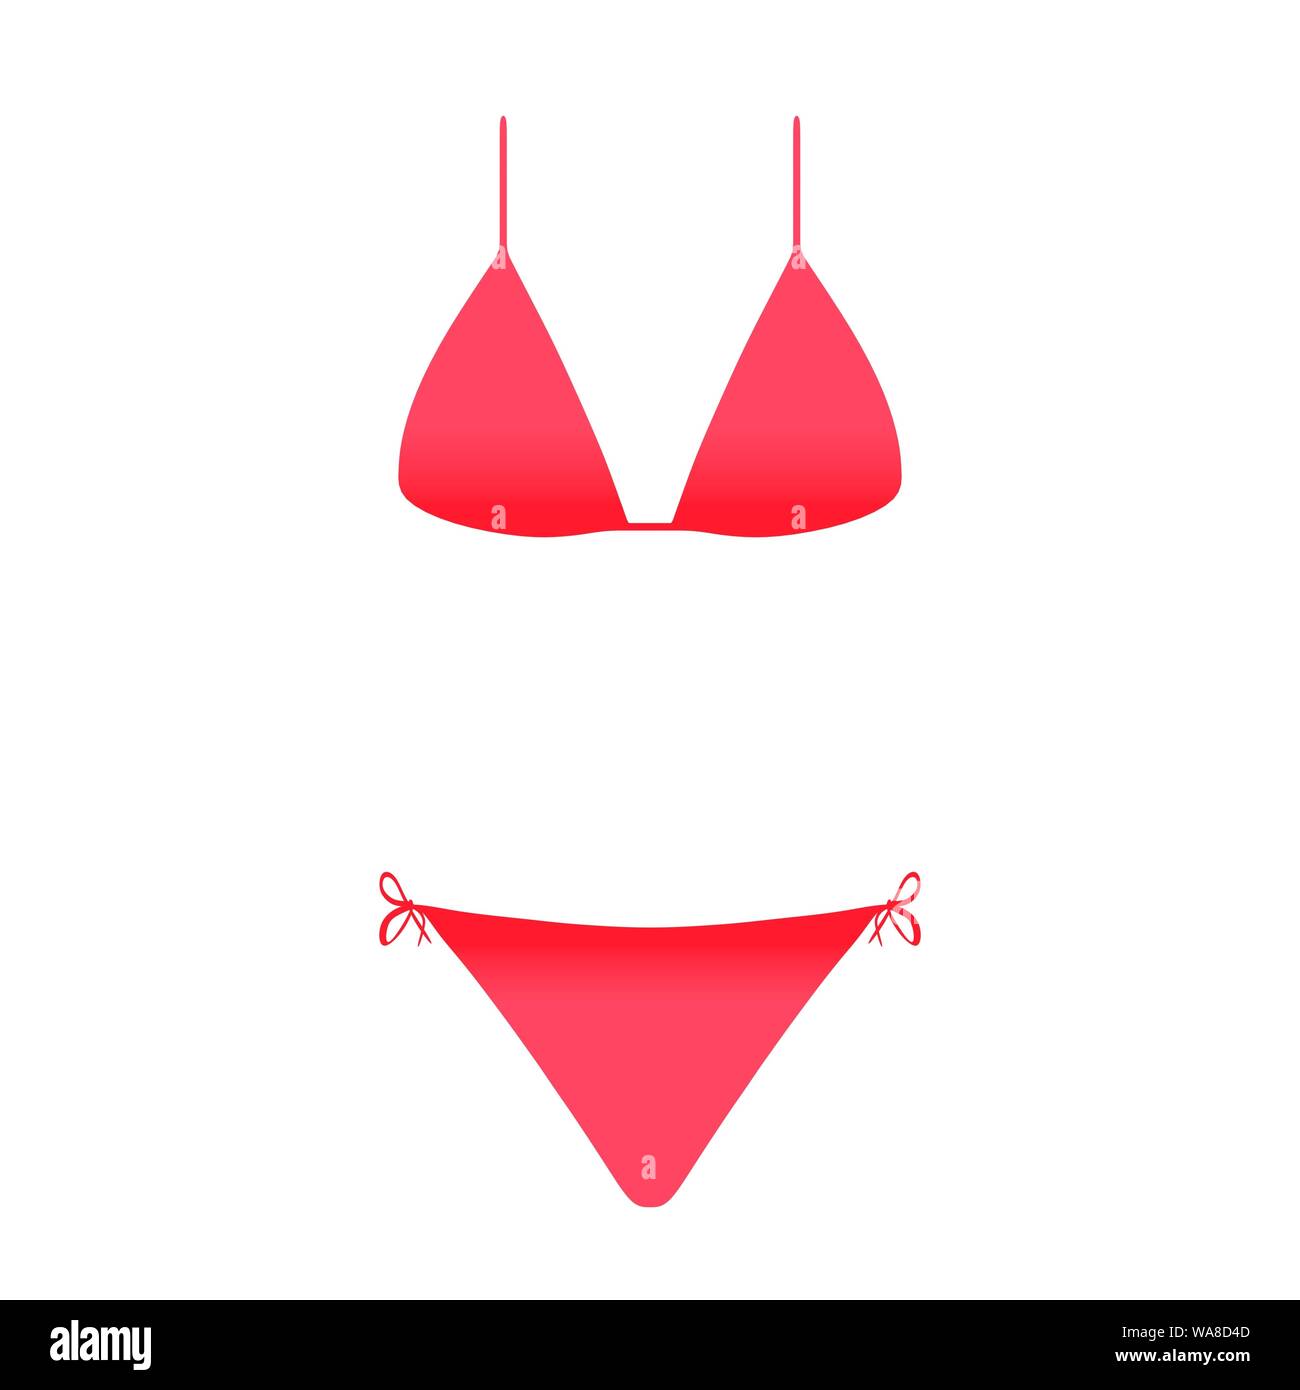 Pink and Red Bikini Emoji Stock Photo - Alamy